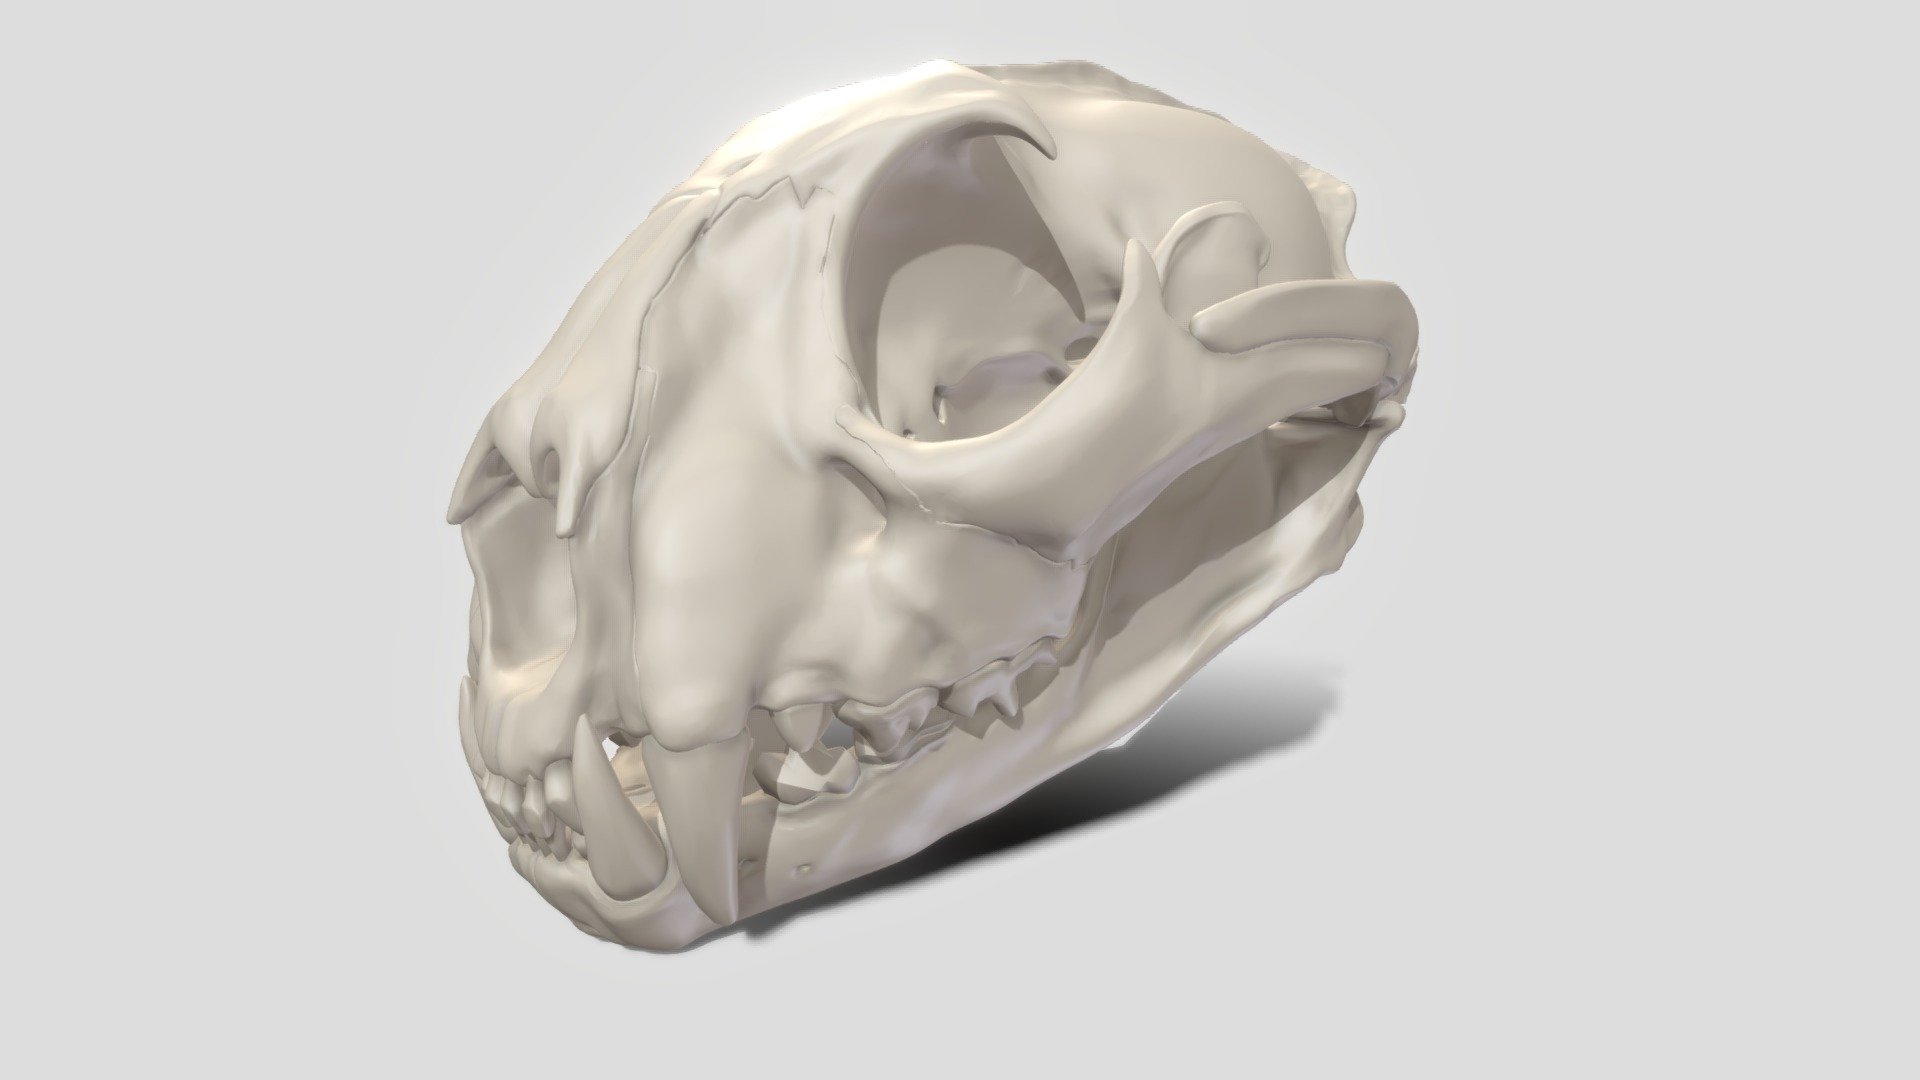 decimated sculpt of cougar skull.
for CGMasterAcademy course!
Happy Halloween - puma concolour skull - 3D model by verena boeck (@kling) 3d model